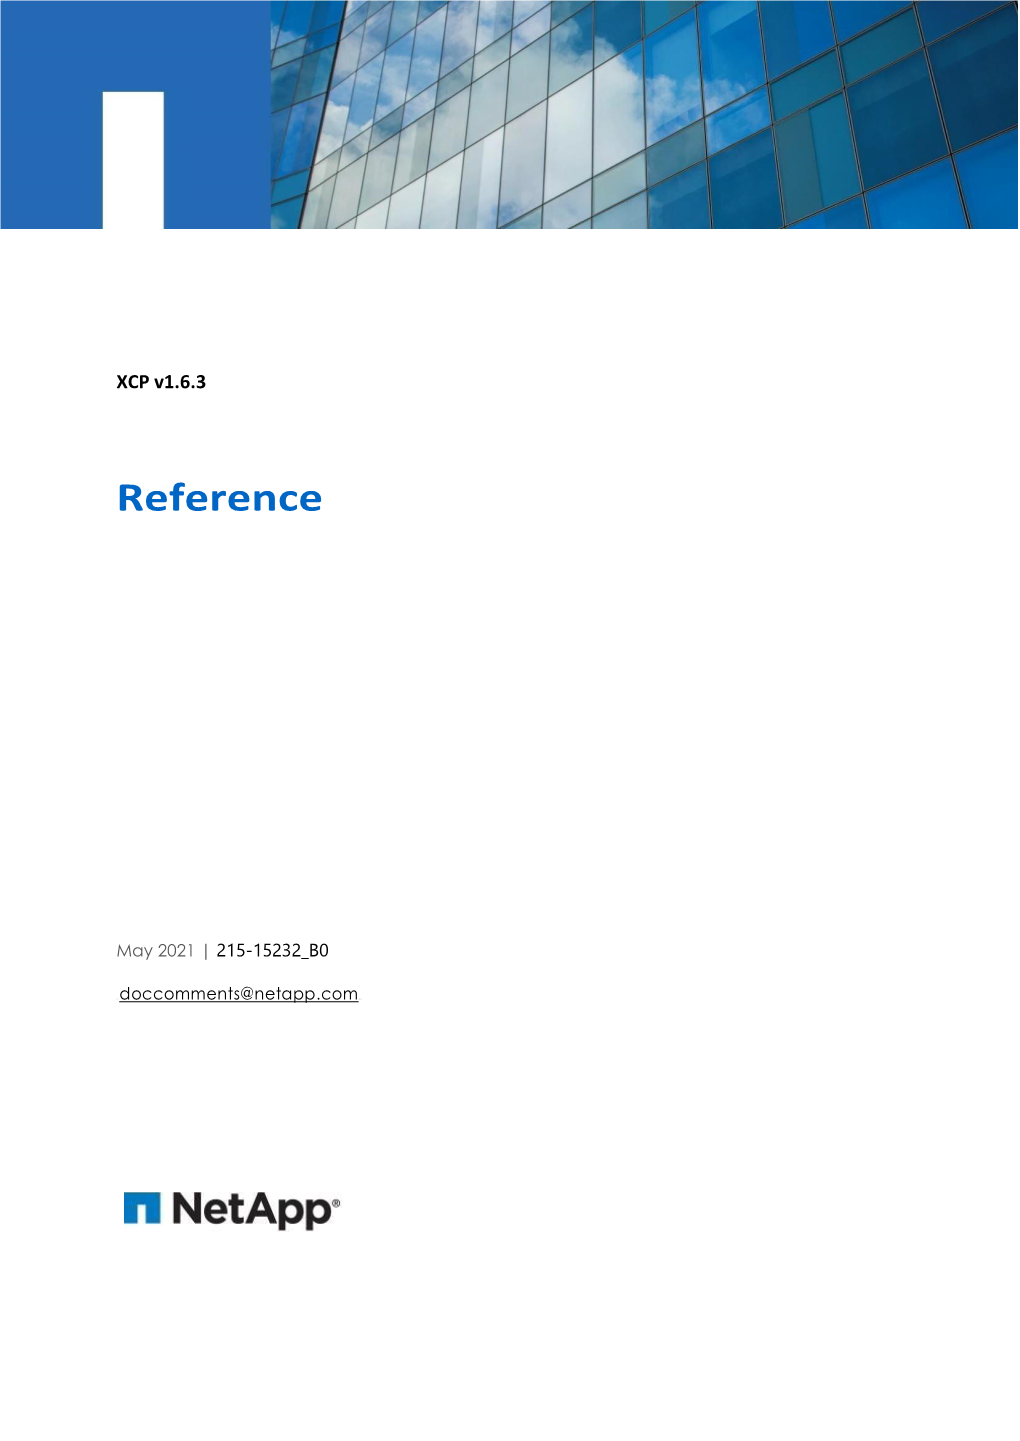 Netapp XCP V1.6.3 Reference